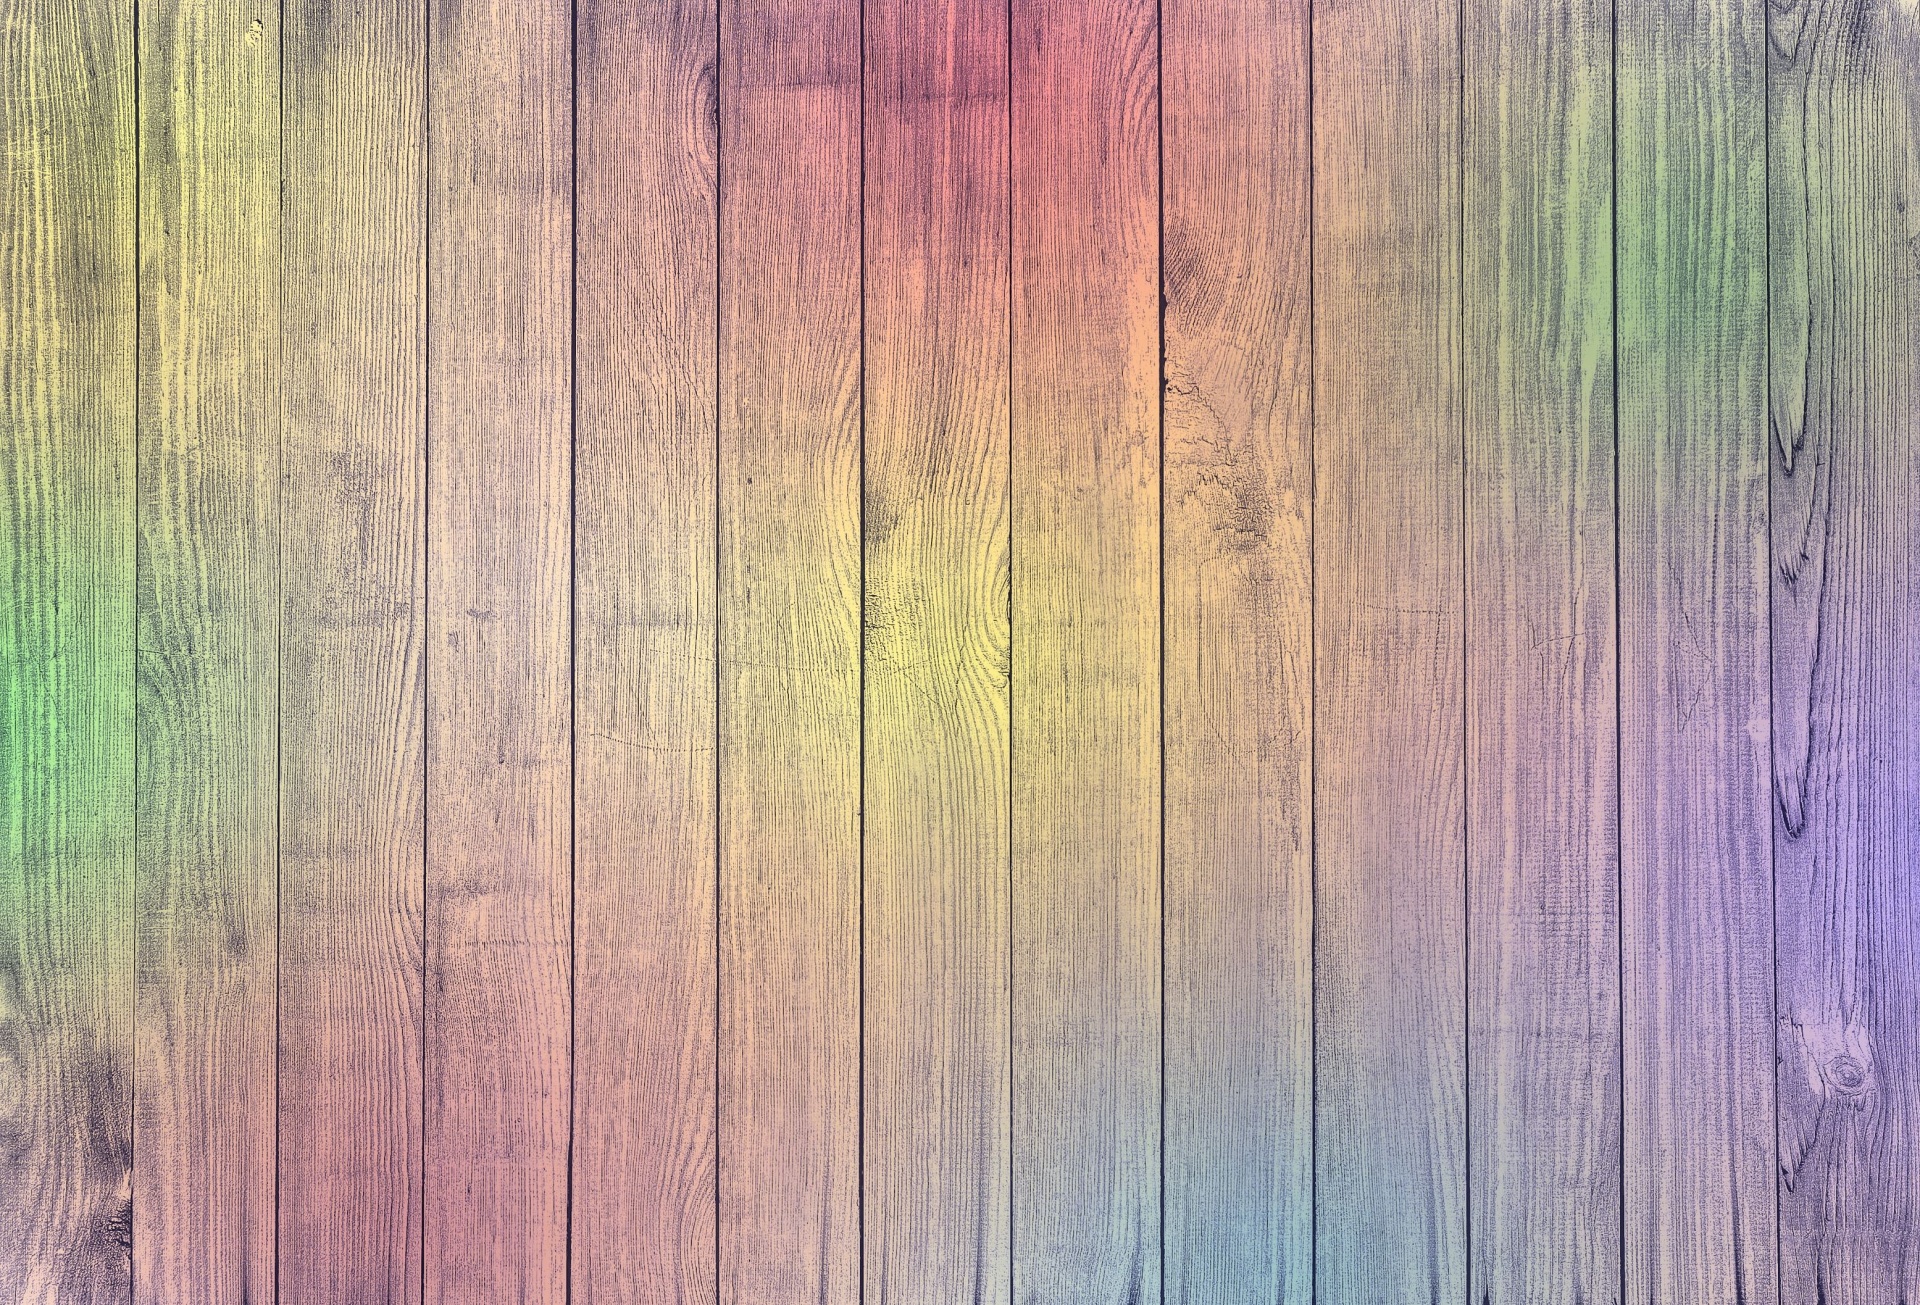 Wood boards wall background colored wood veneer